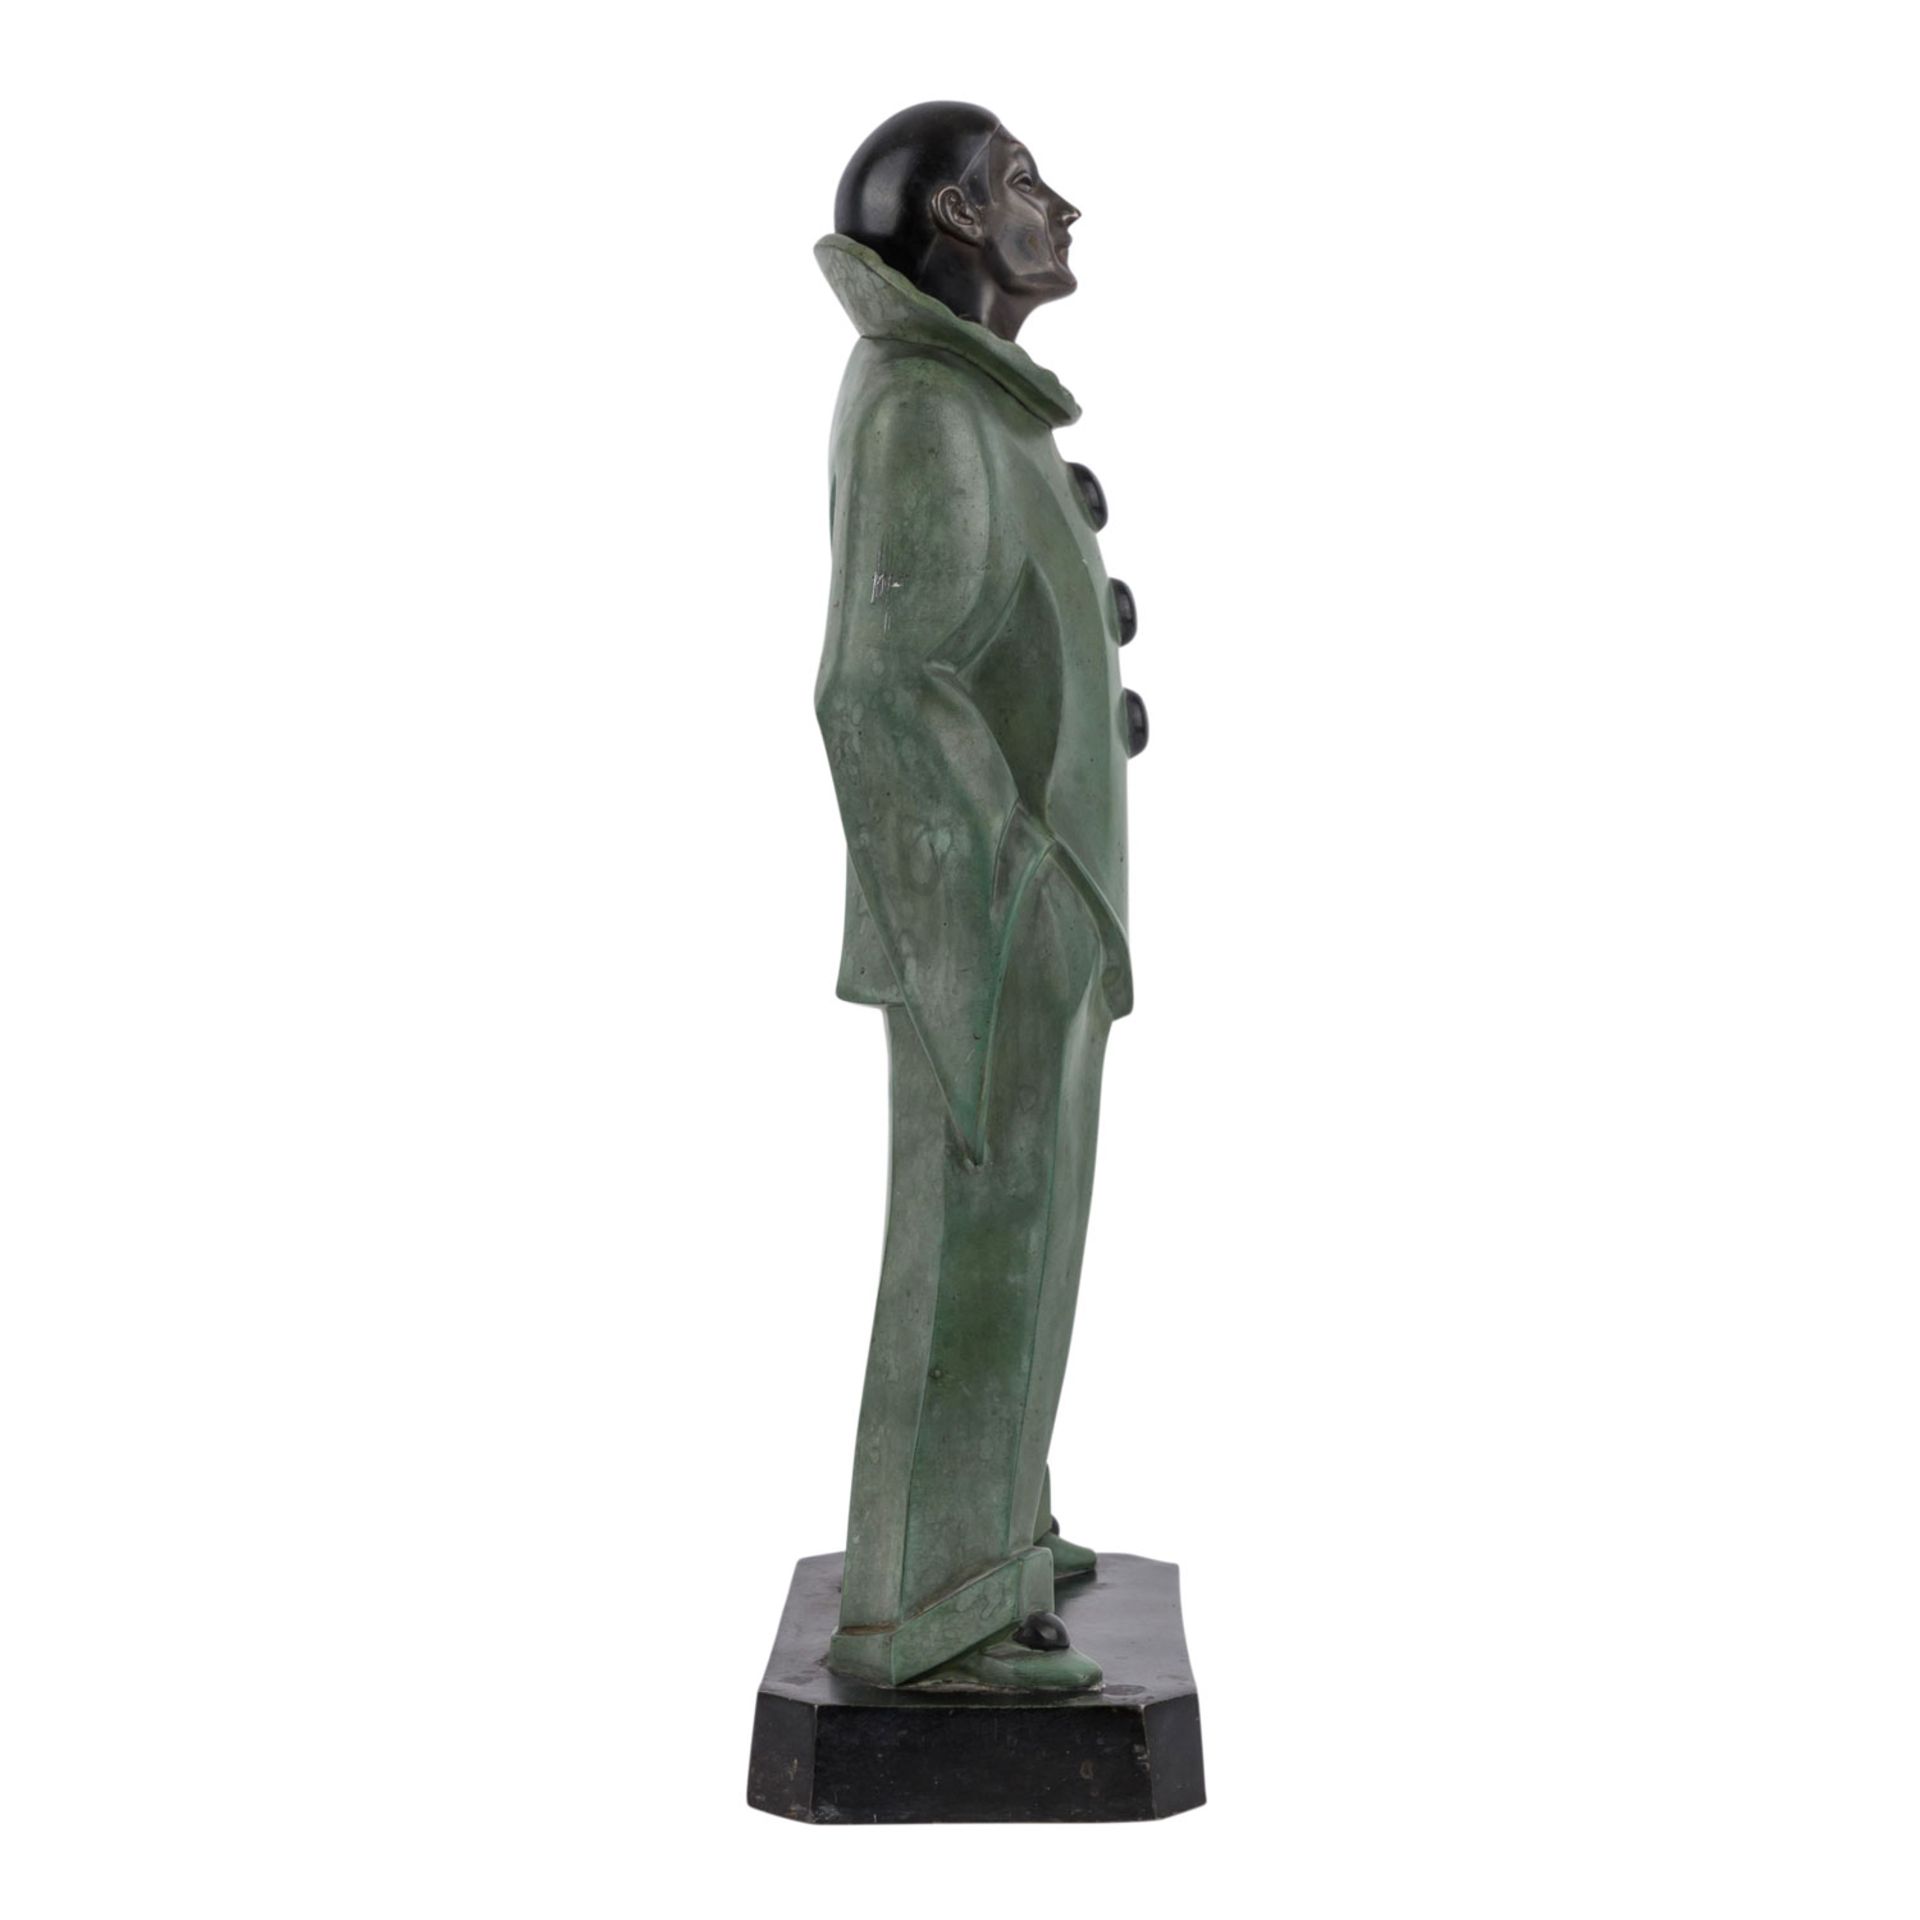 LE VERRIER, MAX (1891-1973) "Pierrot"Bronze, teilw. patiniert, sig. " M. Le Verrier", H: 45 cm. - Image 4 of 6